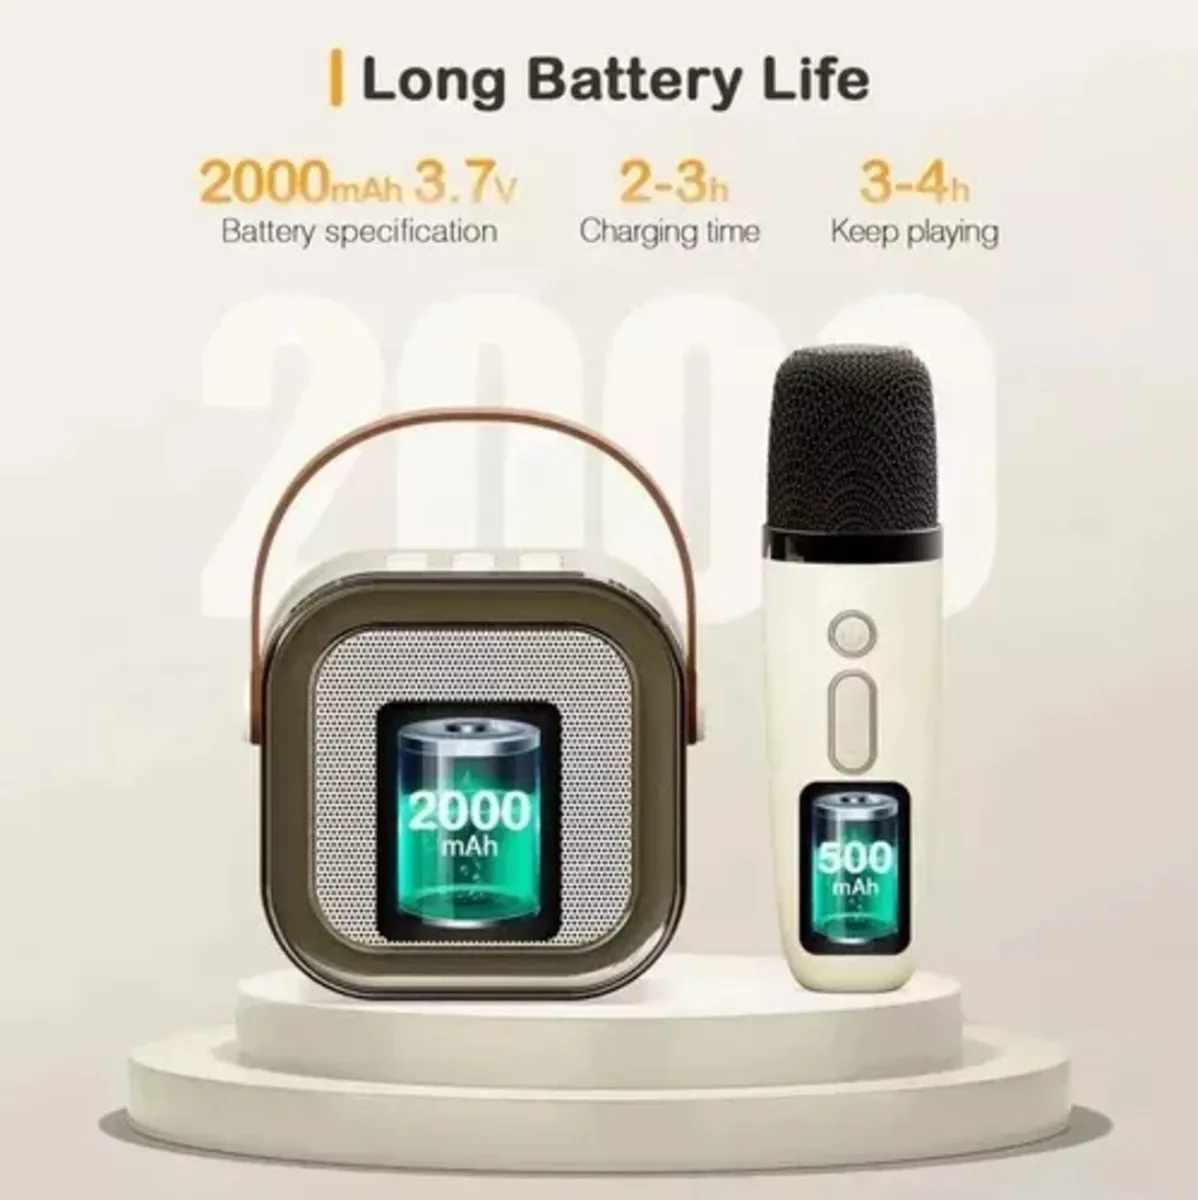 Parlante Bluetooth Portátil Led Rgb Mini Karaoke Micrófono